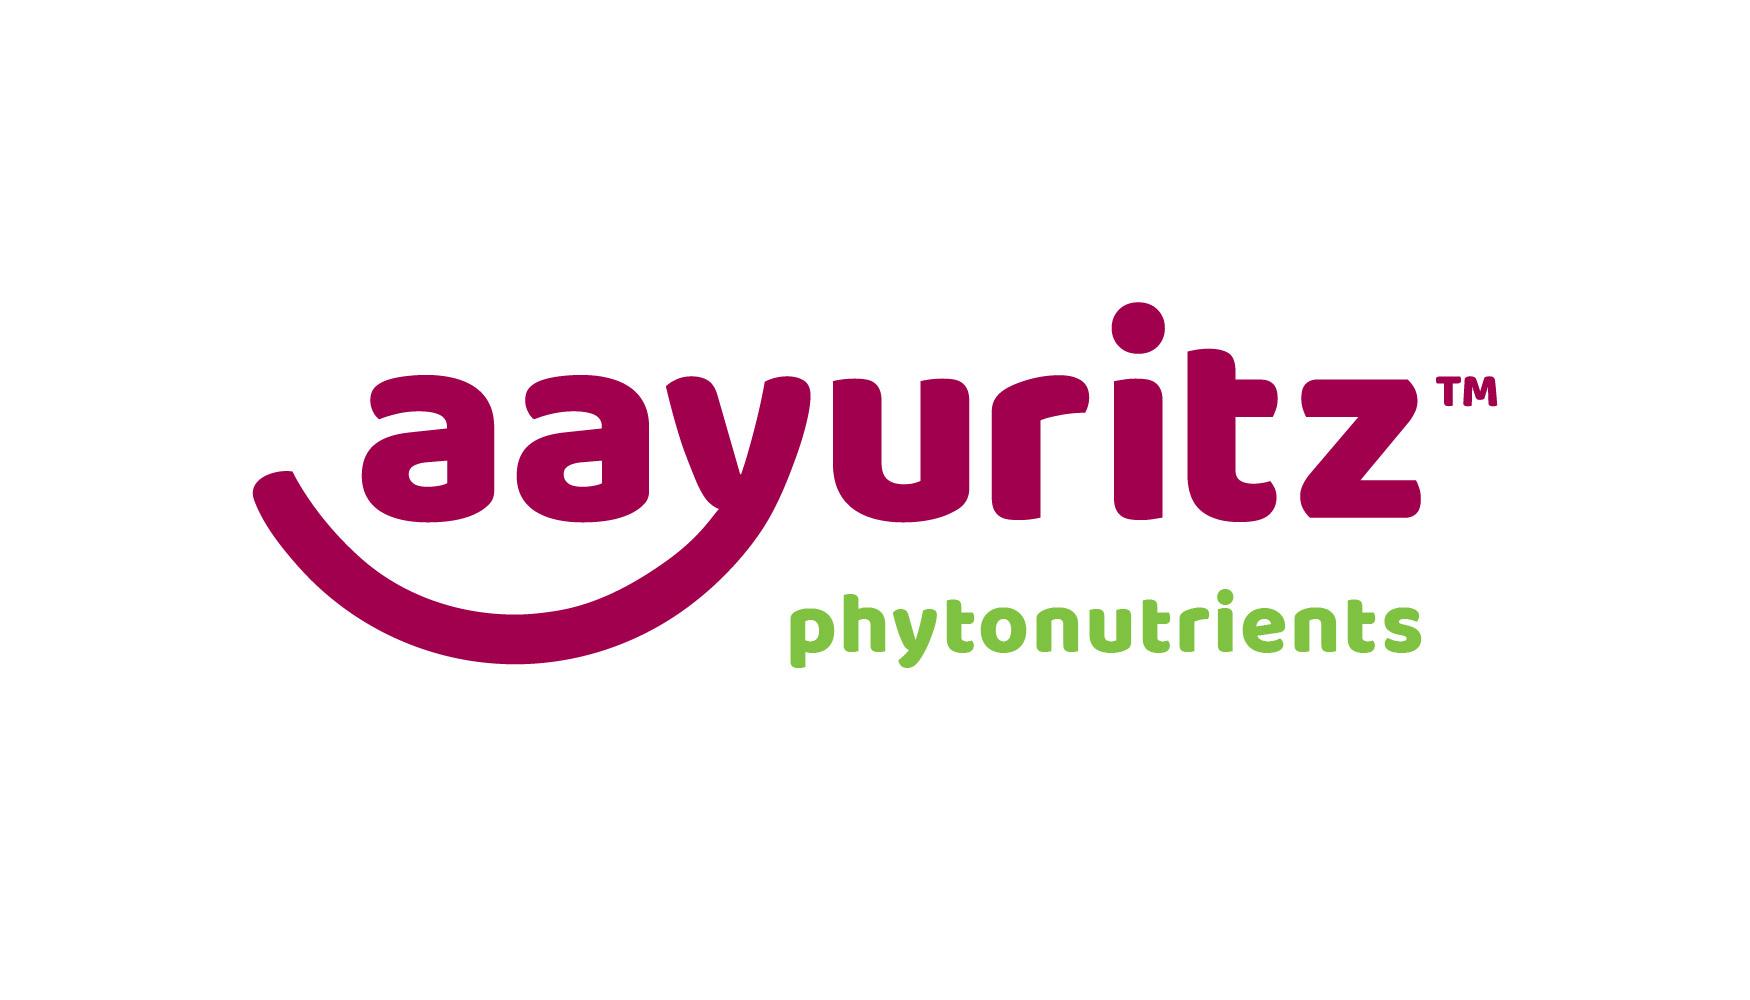 AAYURITZ PHYTONUTRIENTS PVT LTD